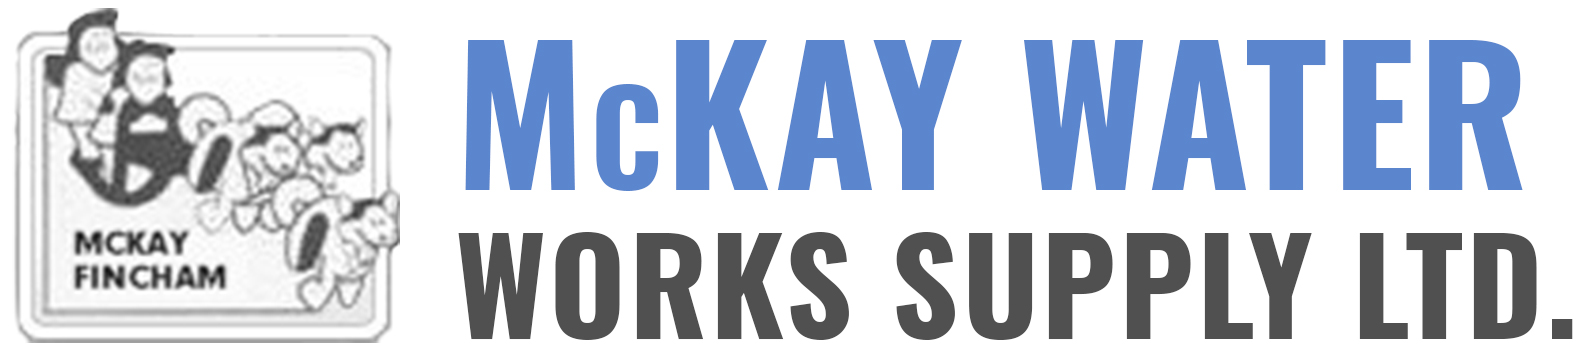 McKay Water Works Supply Ltd.